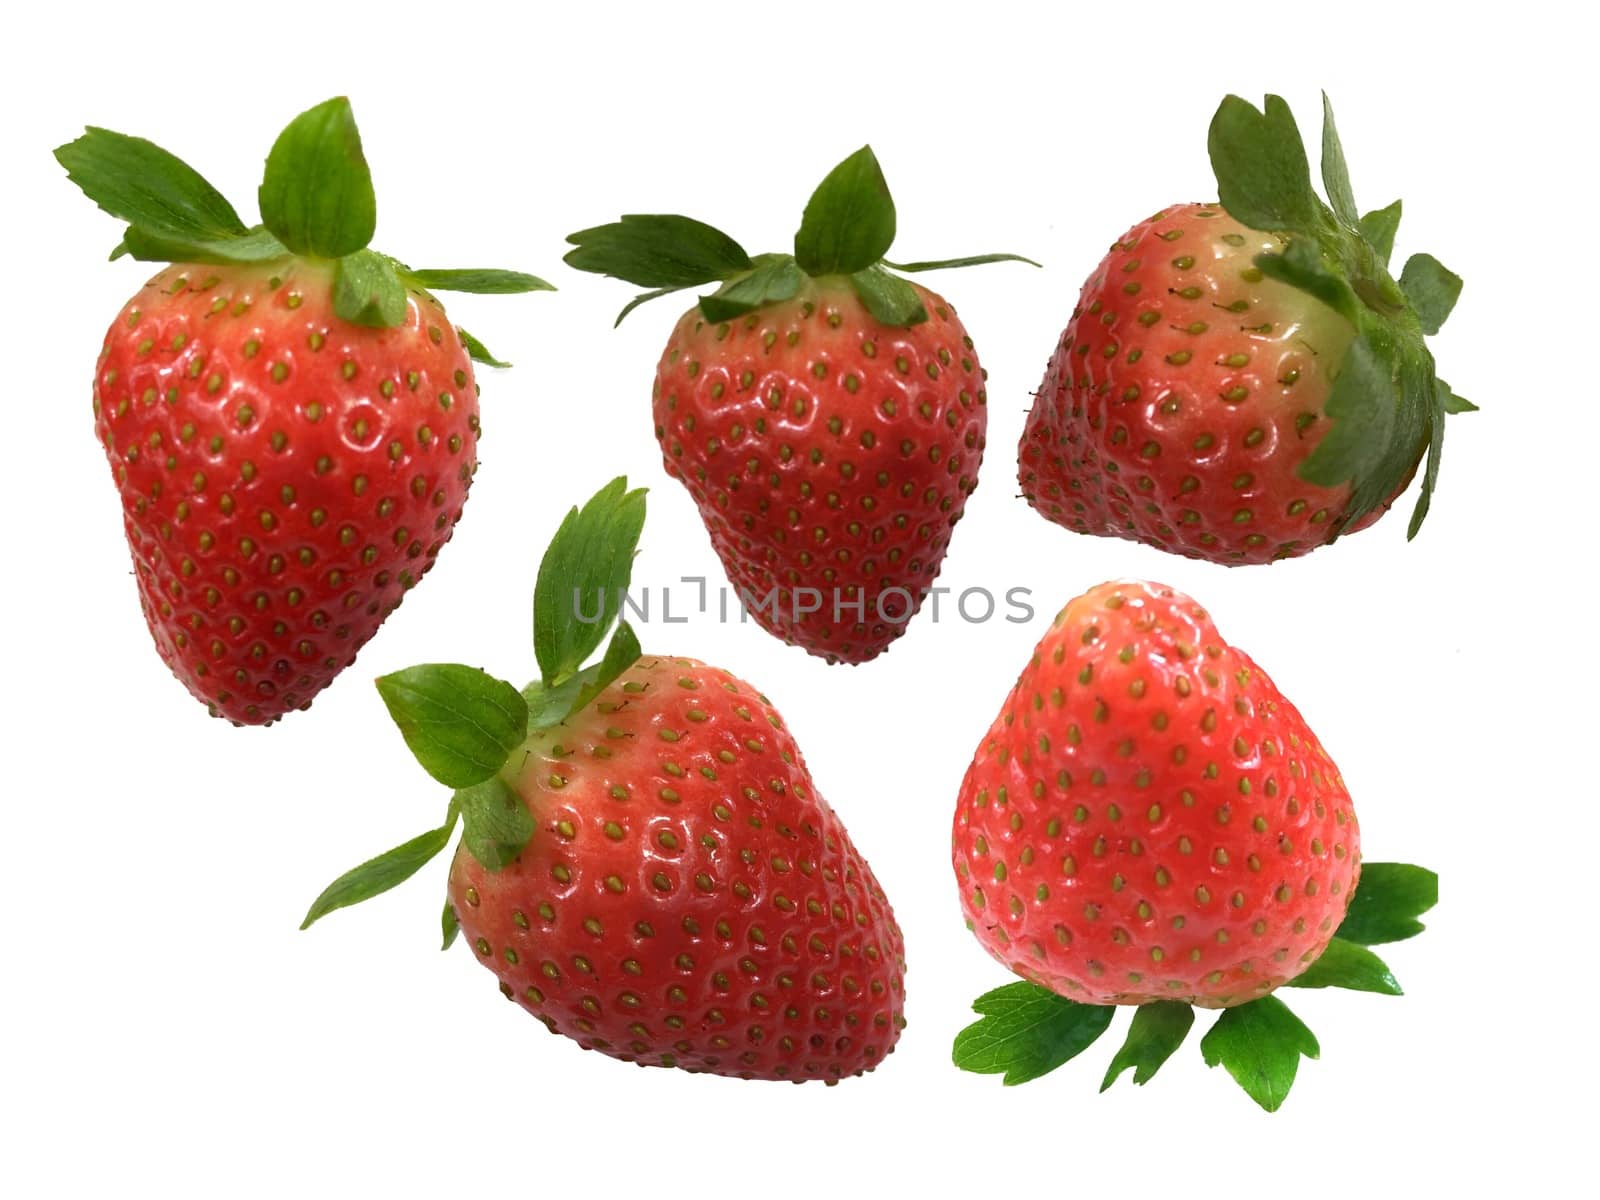 Strawberries isolated on white background. Fresh red ripe strawberries. Organic food.